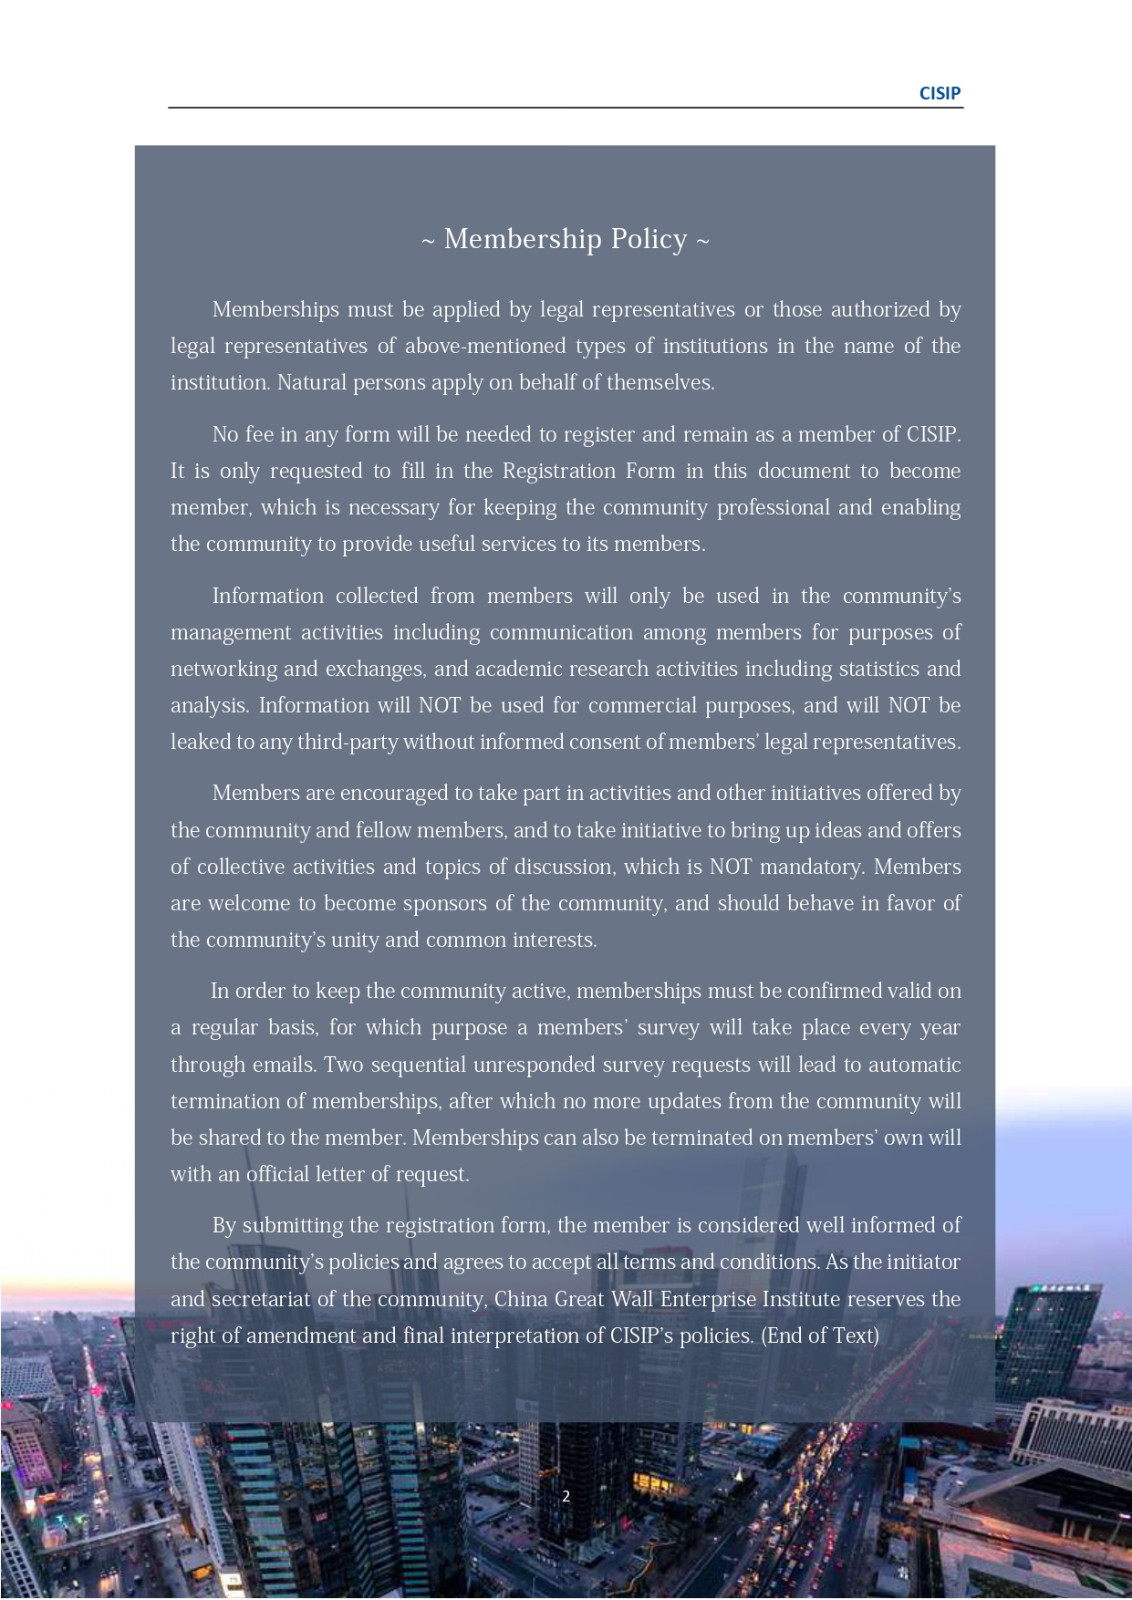 CISIP Membership Policy 2020_page-0003.jpg